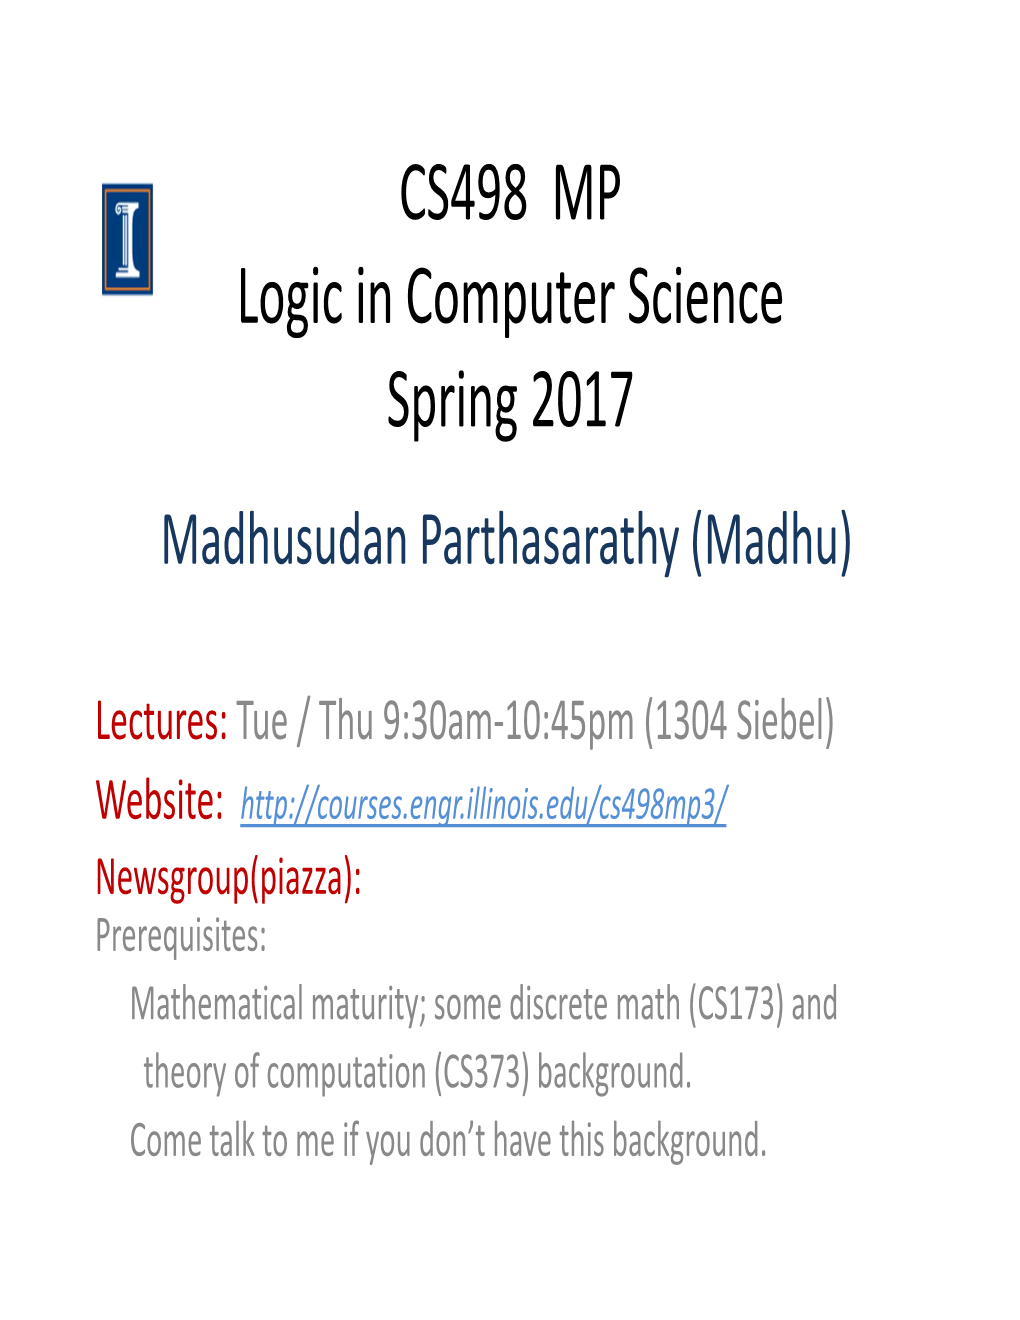 CS498 MP Logic in Computer Science Spring 2017 Madhusudan Parthasarathy (Madhu)